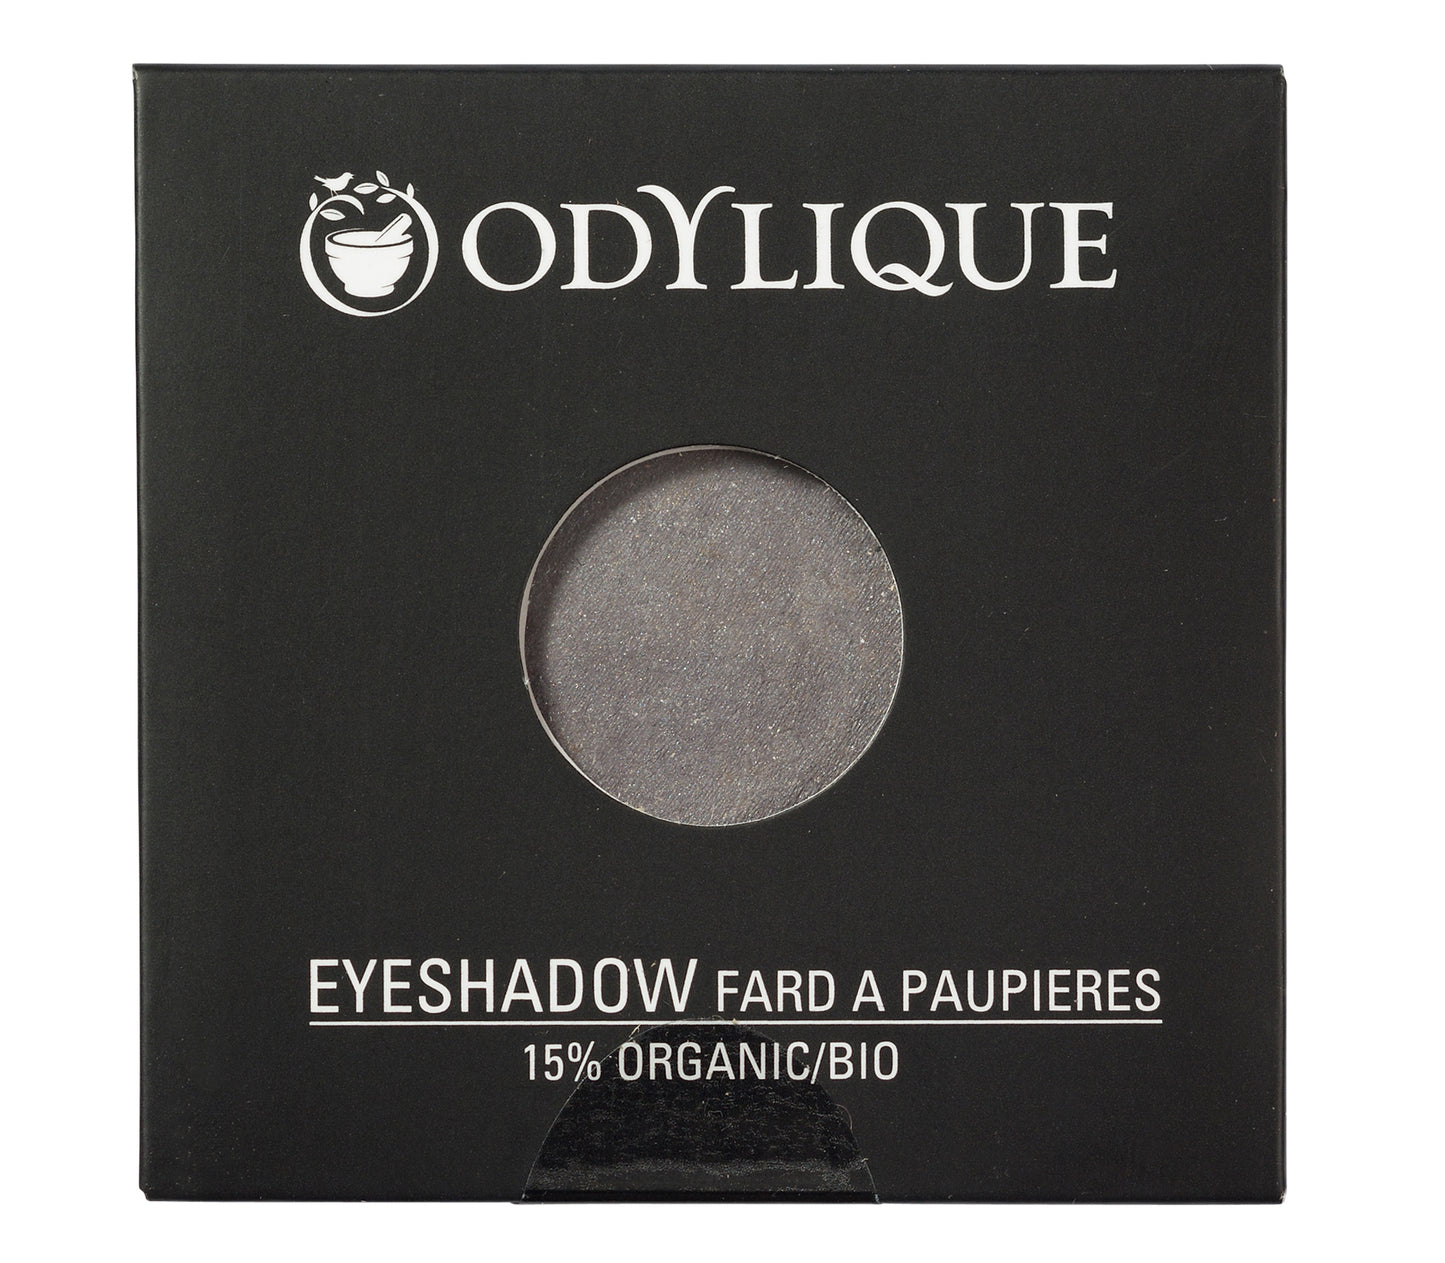 Single pan Odylique organic eyeshadow in shade Slate, placed in its black packaging.